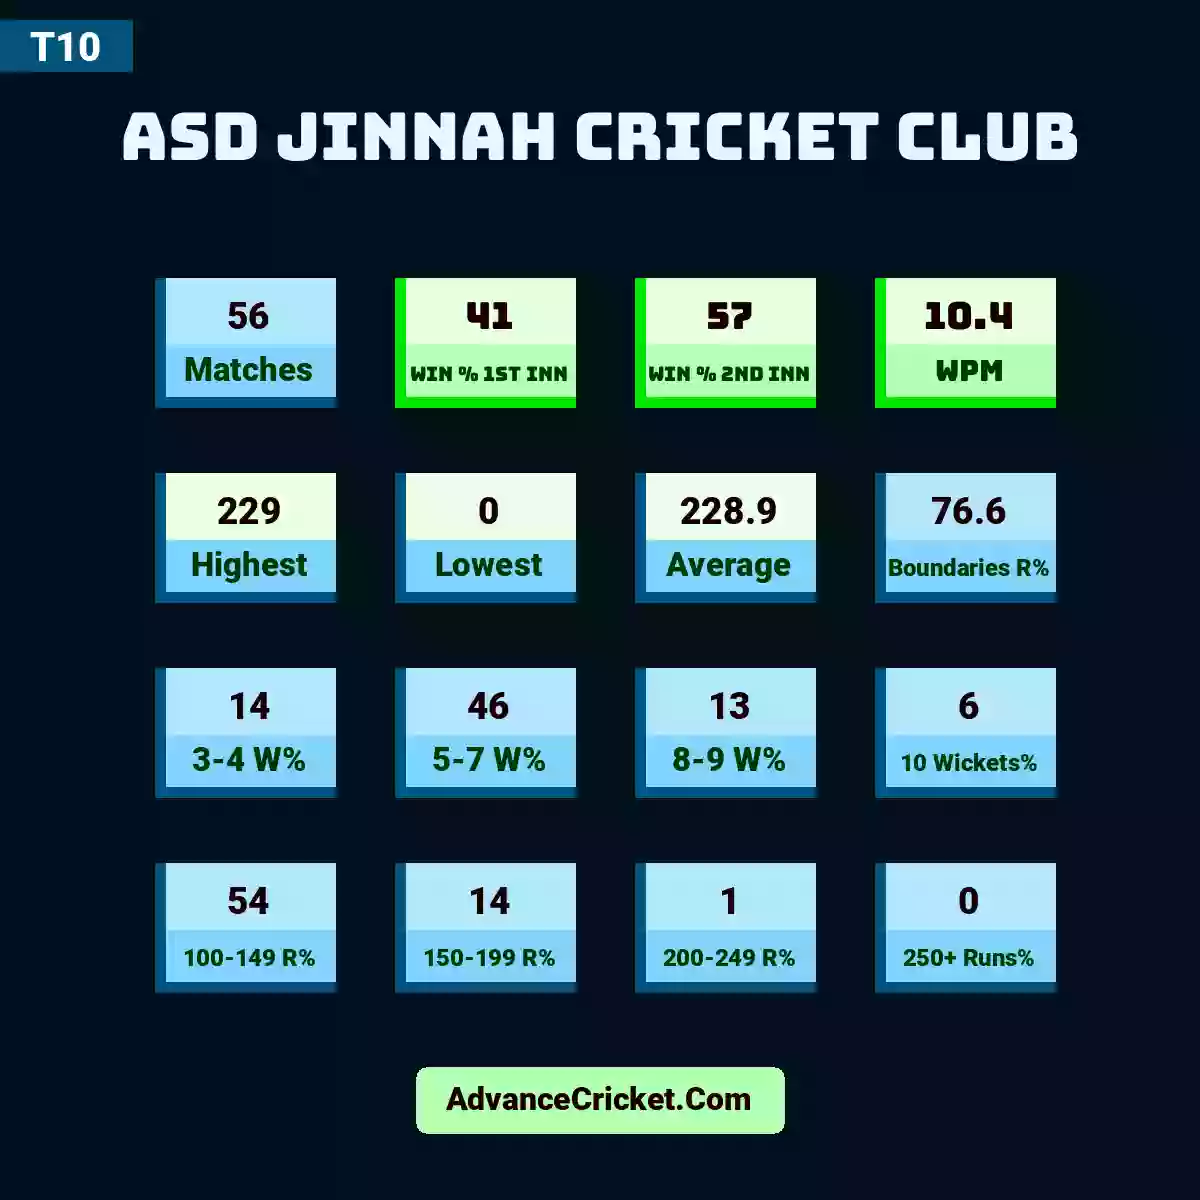 Image showing ASD Jinnah Cricket Club T10 with Matches: 30, Win % 1st Inn: 33, Win % 2nd Inn: 63, WPM: 9.8, Highest: 229, Lowest: 0, Average: 222.5, Boundaries R%: 77.3, 3-4 W%: 17, 5-7 W%: 43, 8-9 W%: 10, 10 Wickets%: 7, 100-149 R%: 50, 150-199 R%: 15, 200-249 R%: 2, 250+ Runs%: 0.